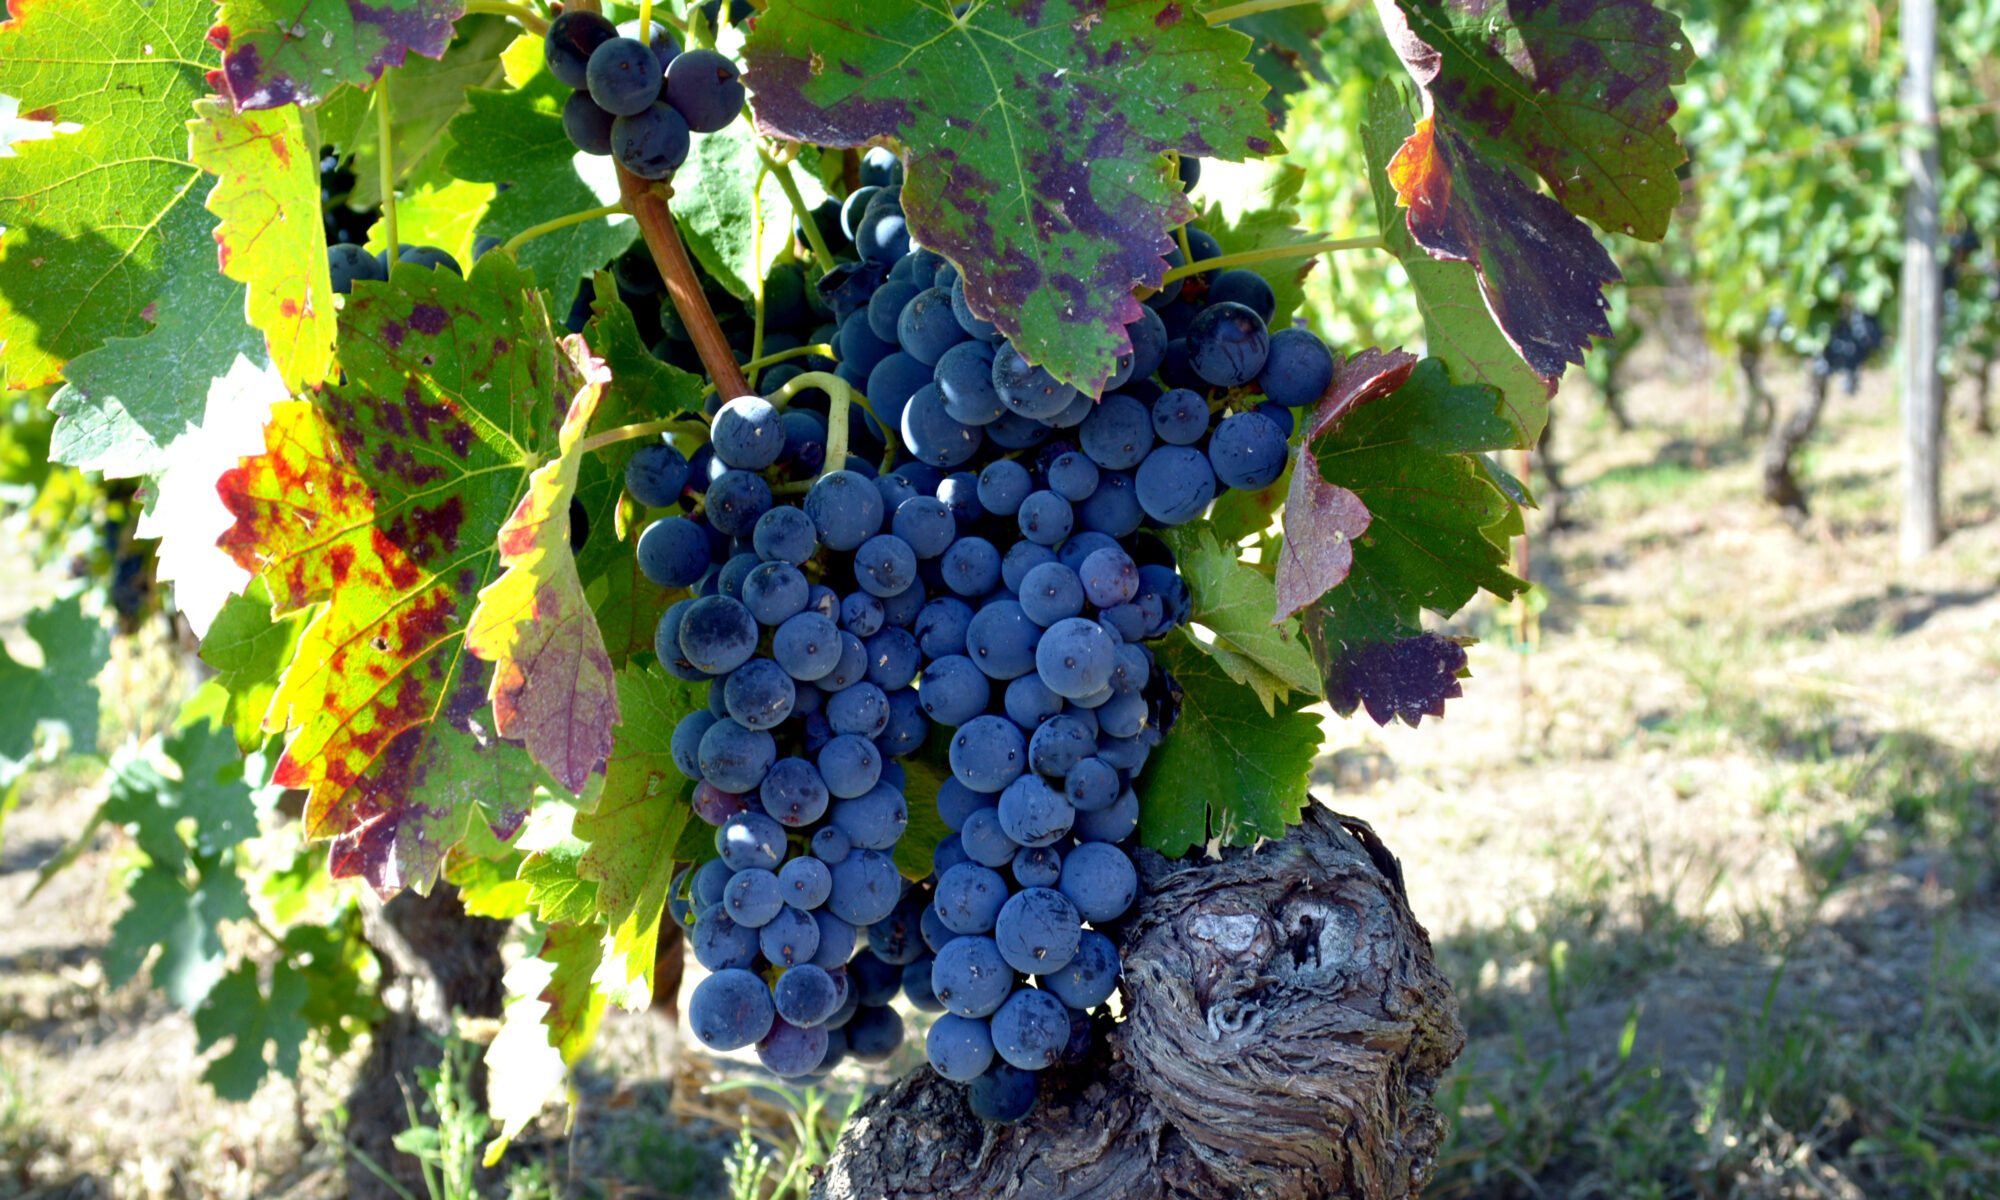 Elena Fucci_image_Aglianico grapes close up6